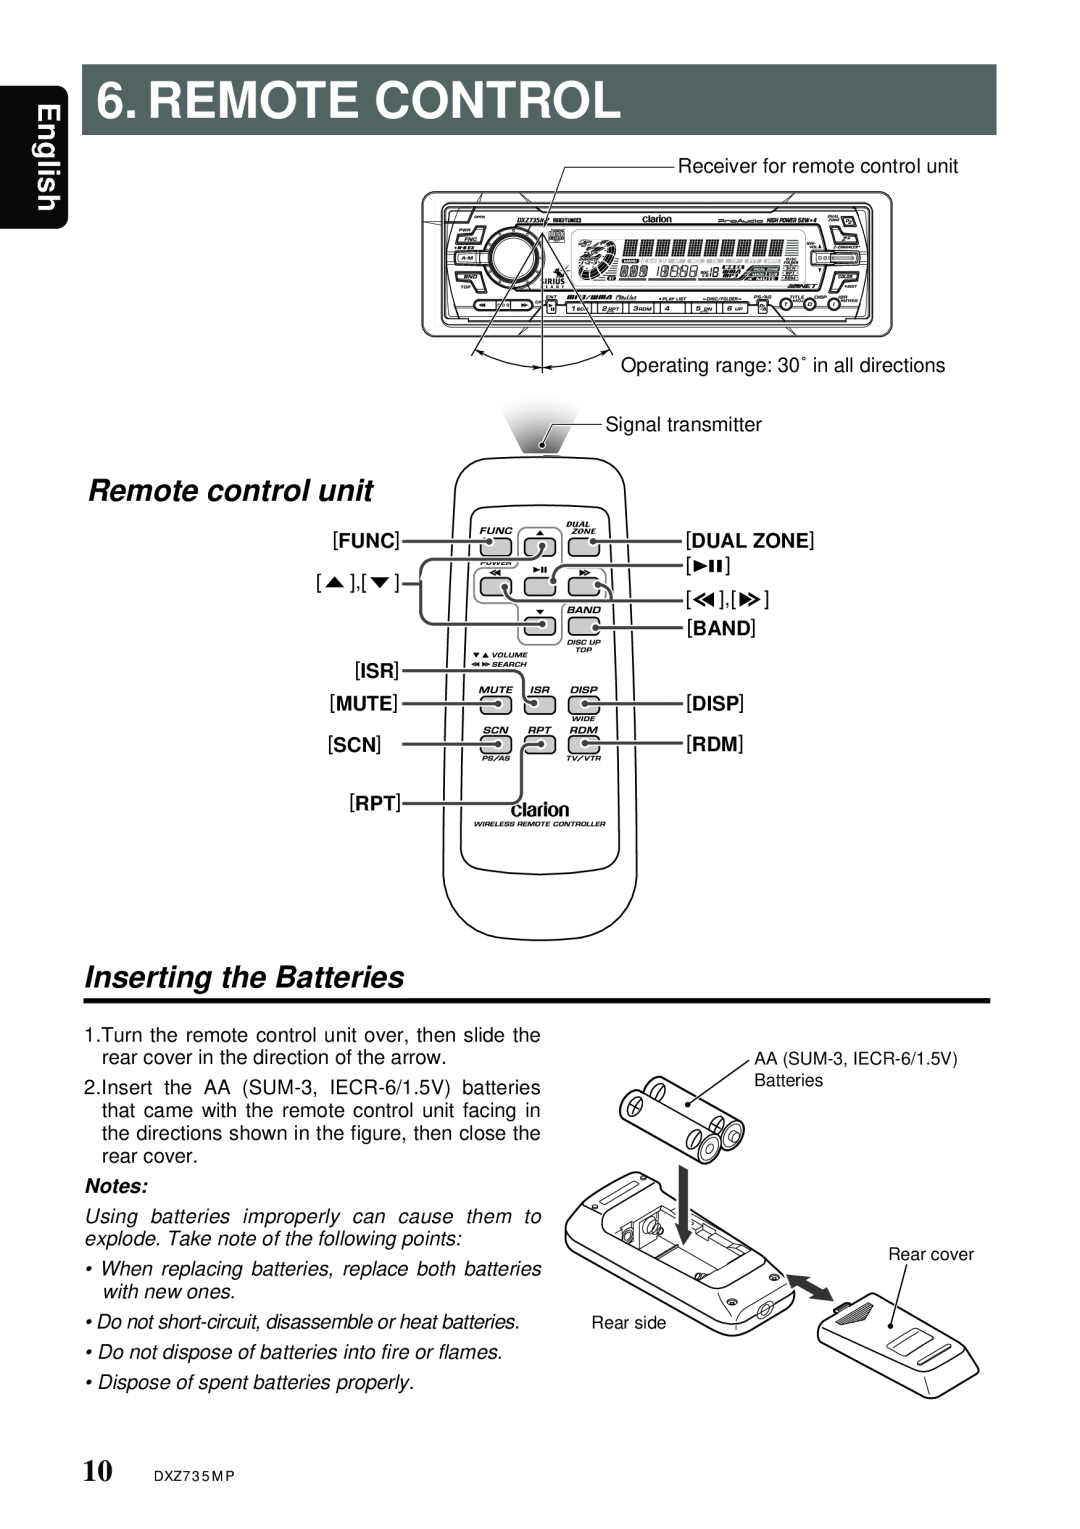 Clarion DXZ735MP Remote Control, Remote control unit, Inserting the Batteries, English, Func, Dual Zone, Band, Mute, Disp 